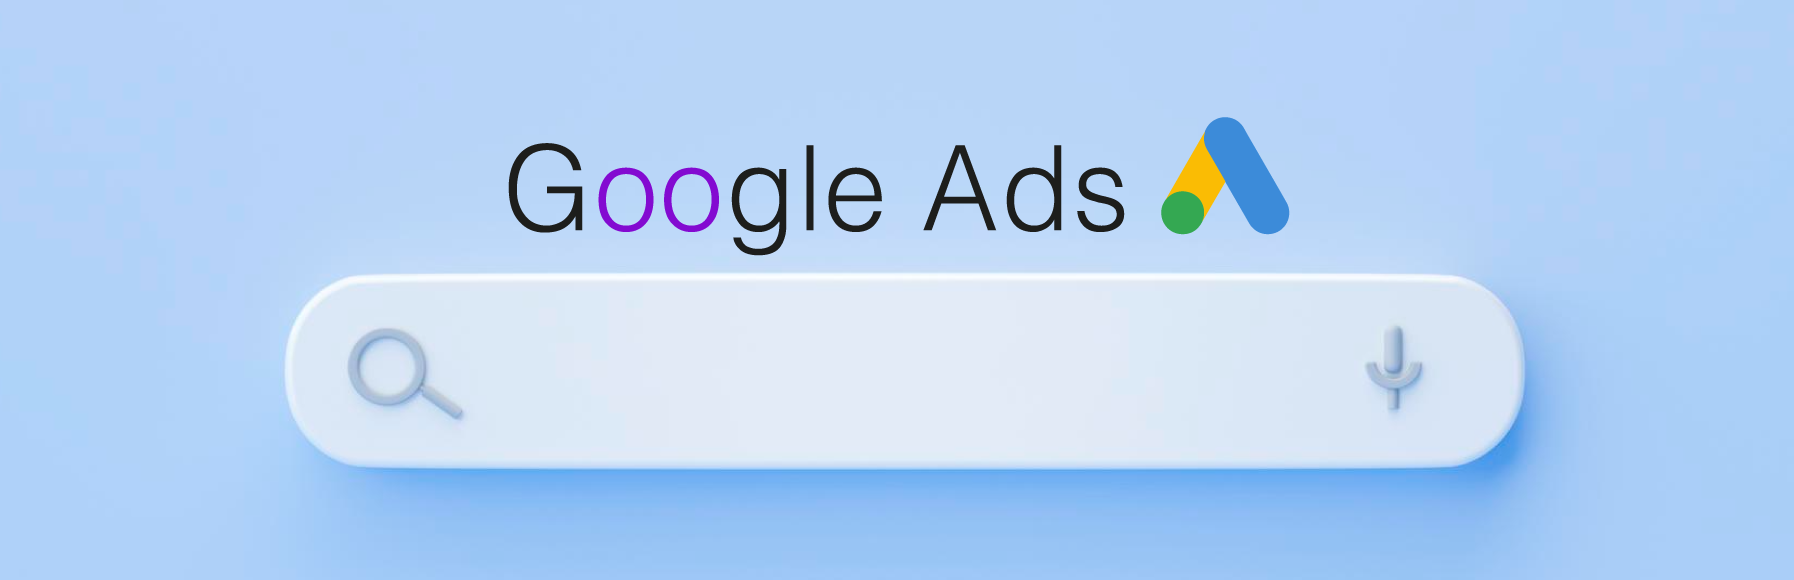 Banner-Inicio-Google-Ads-impactos-digitales